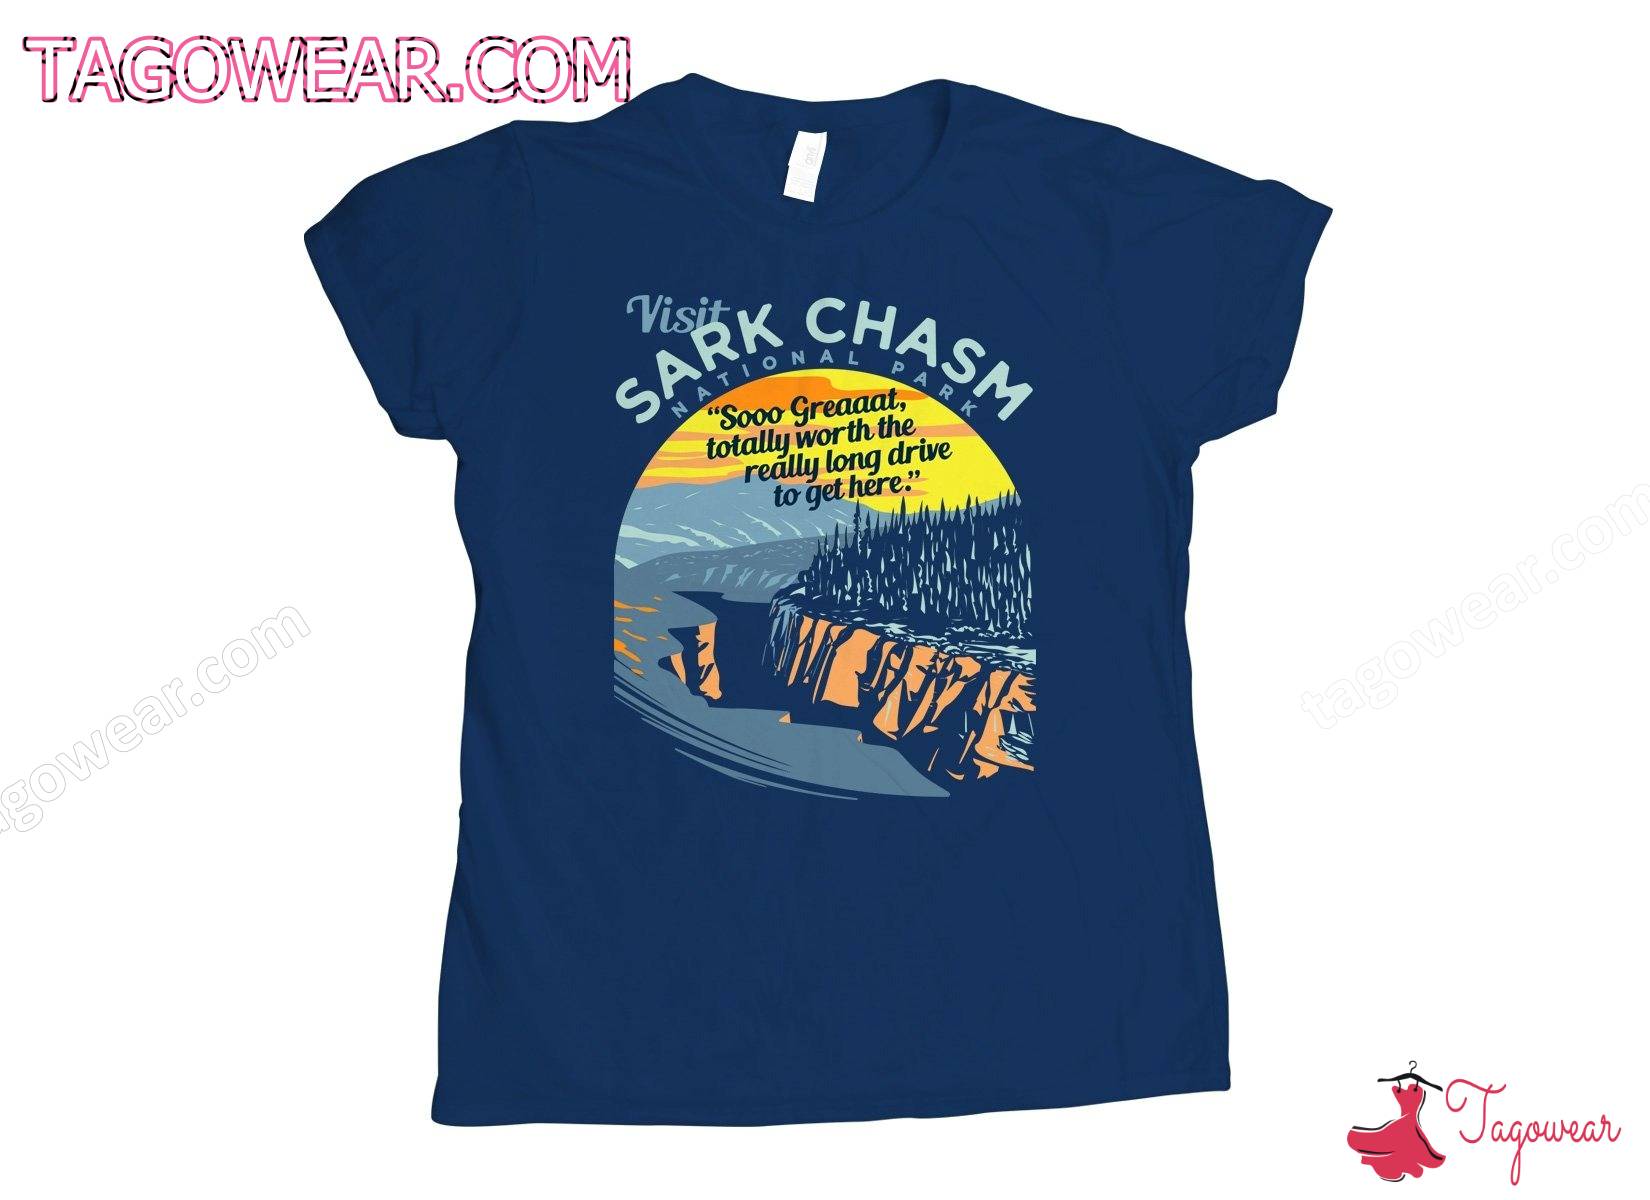 Visit Sark Chasm National Park Shirt a